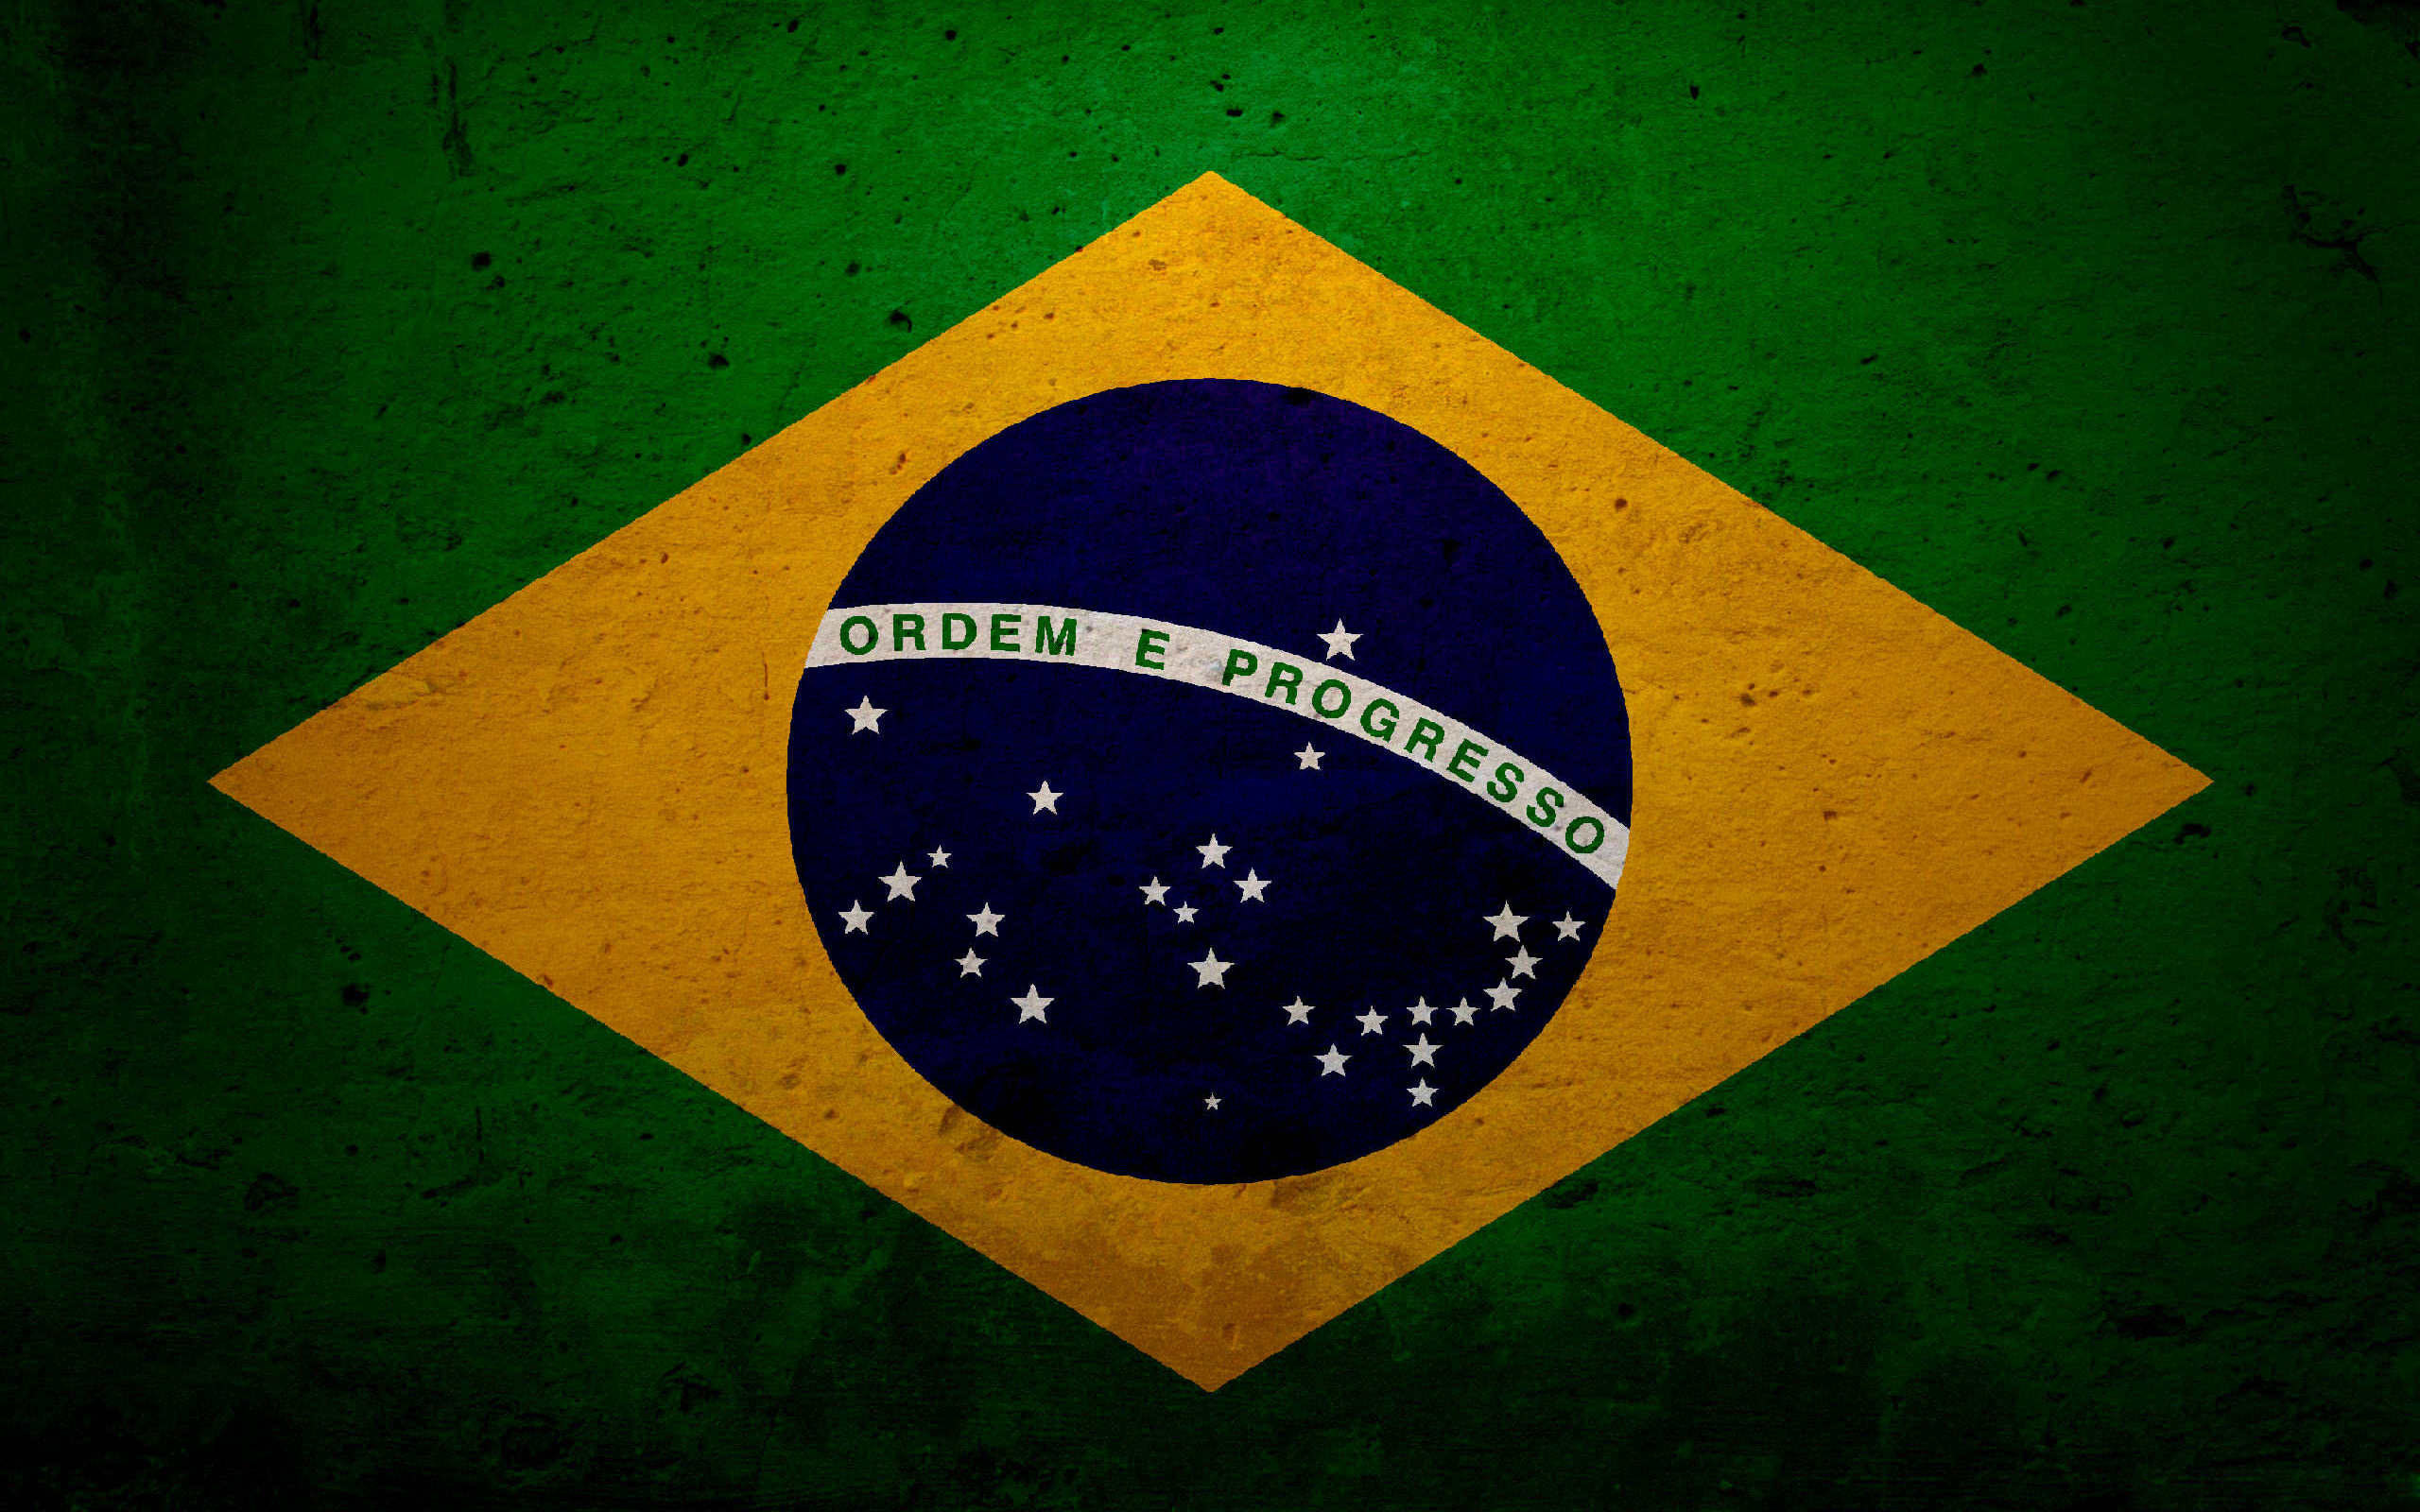 2560x1600 Brazil flag football hd backgrounds.